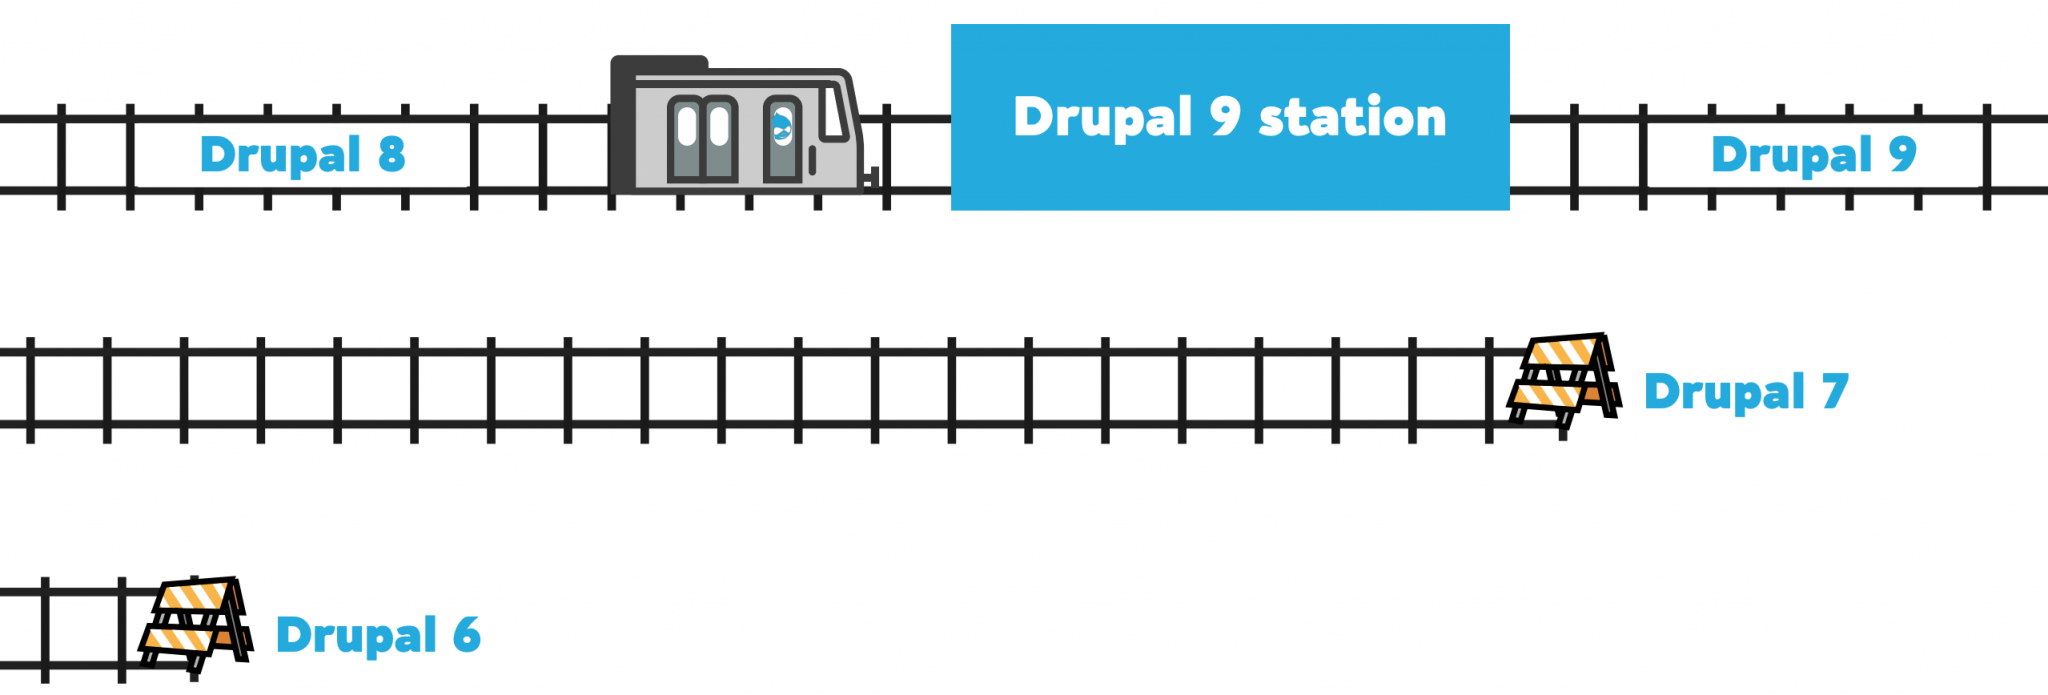 Three tracks: Drupal 8 train goes to Drupal 9. Drupal 7 and Drupal 6 tracks lead to dead ends.